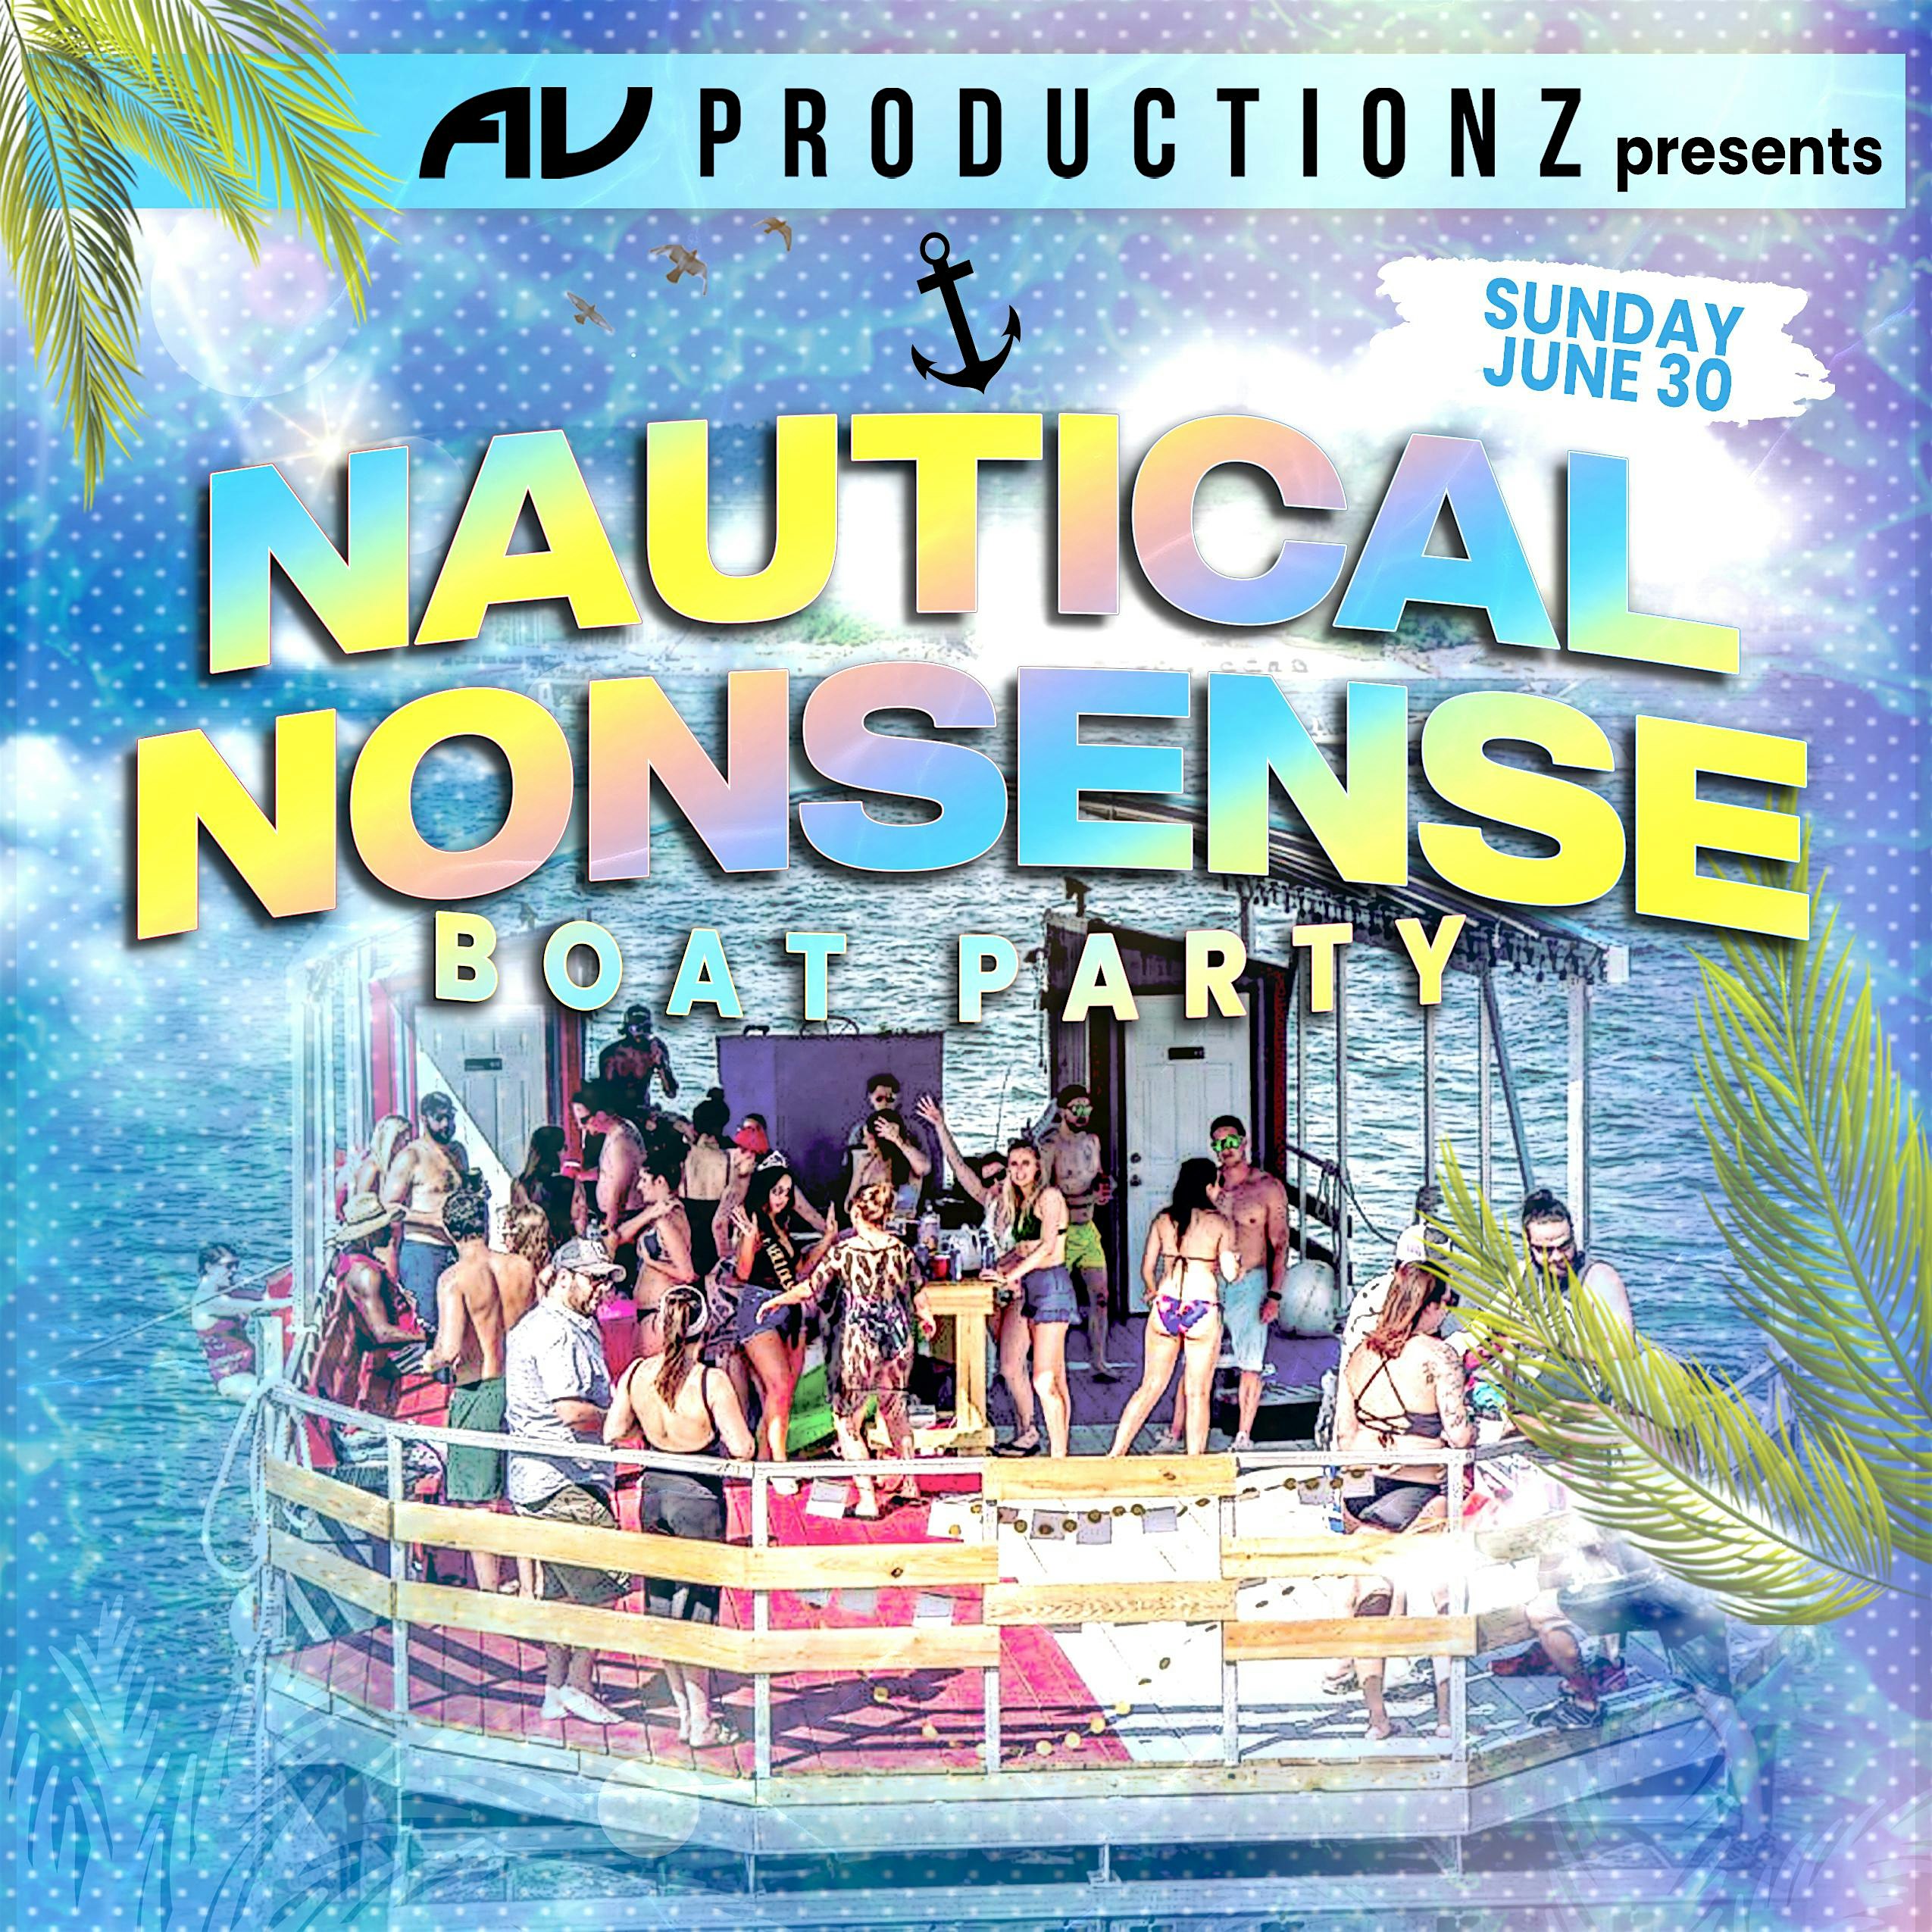 Nautical Nonsense (Boat Party) w\/ AV Productionz